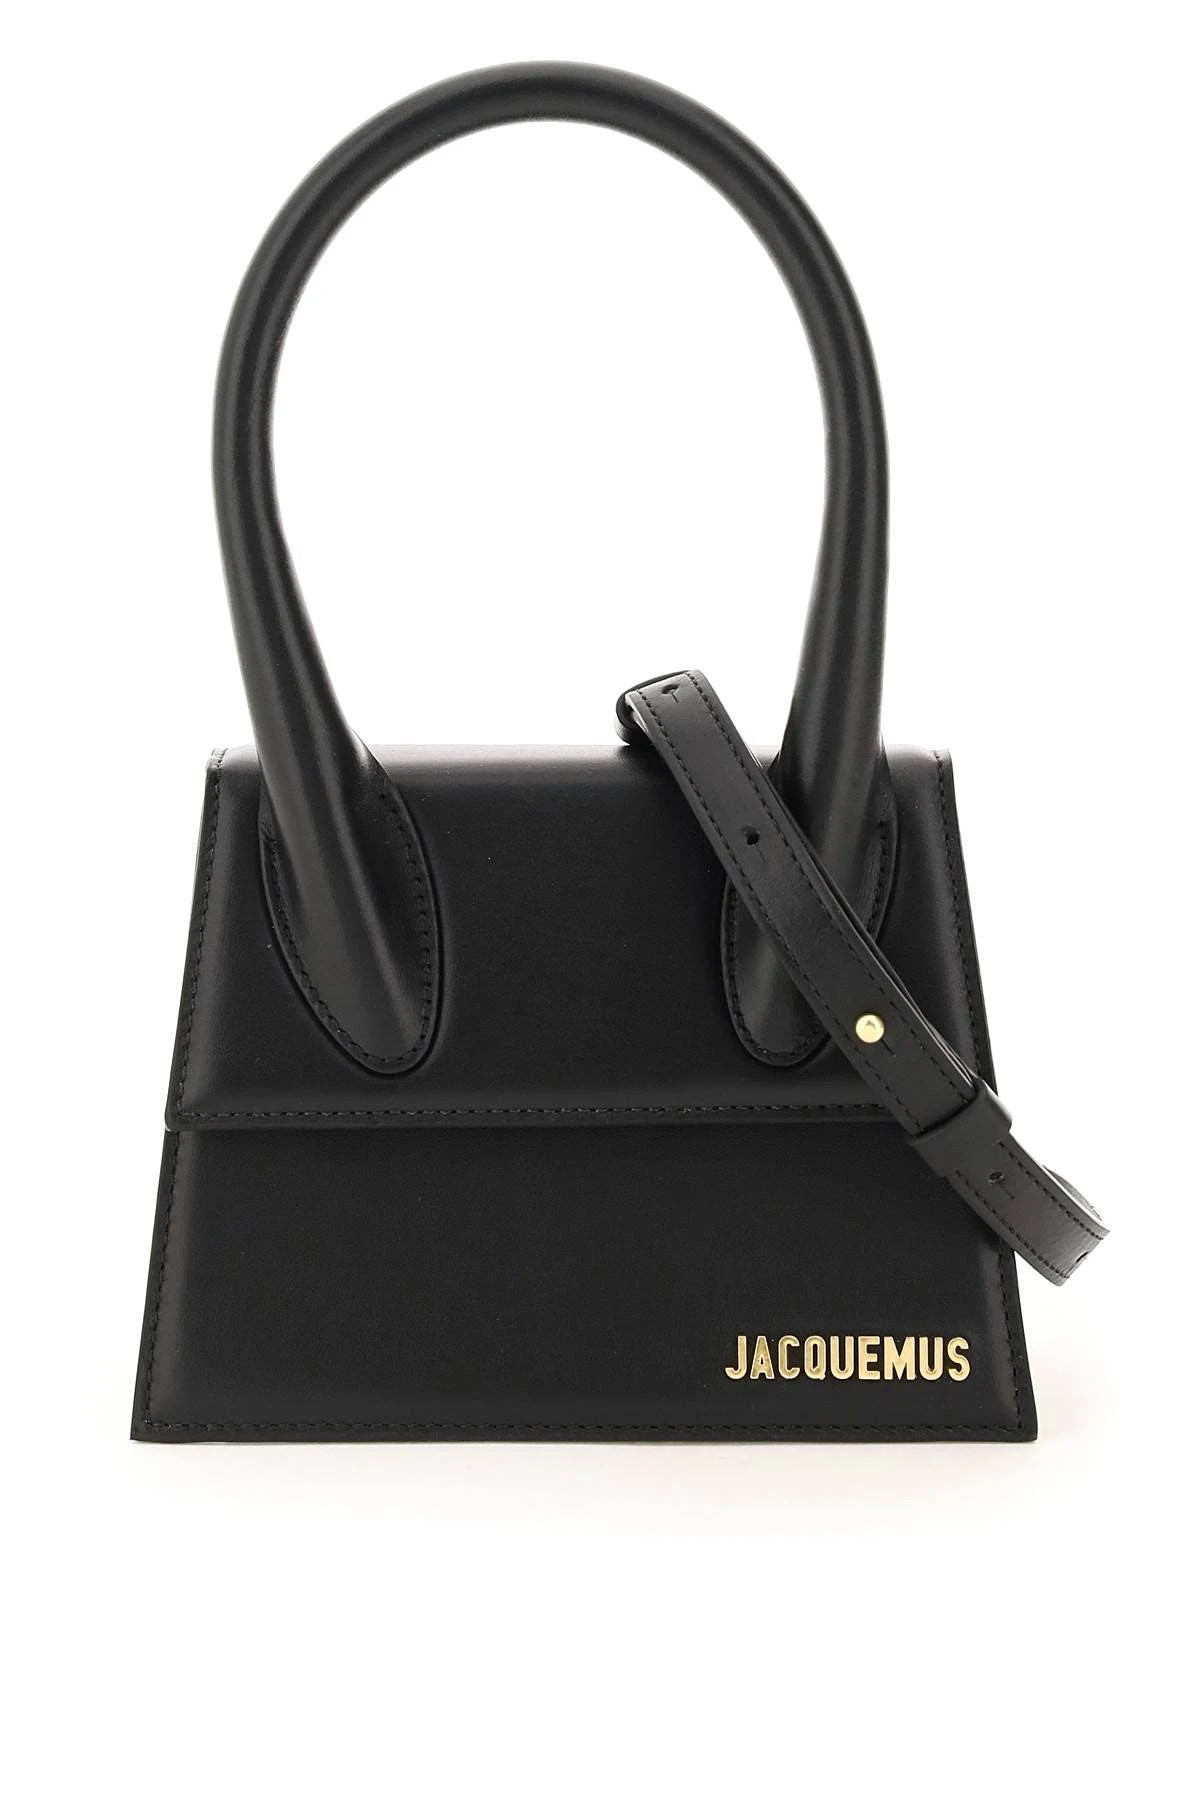 Jacquemus Le Chiquito Moyen Bag in Black - Gift Guru